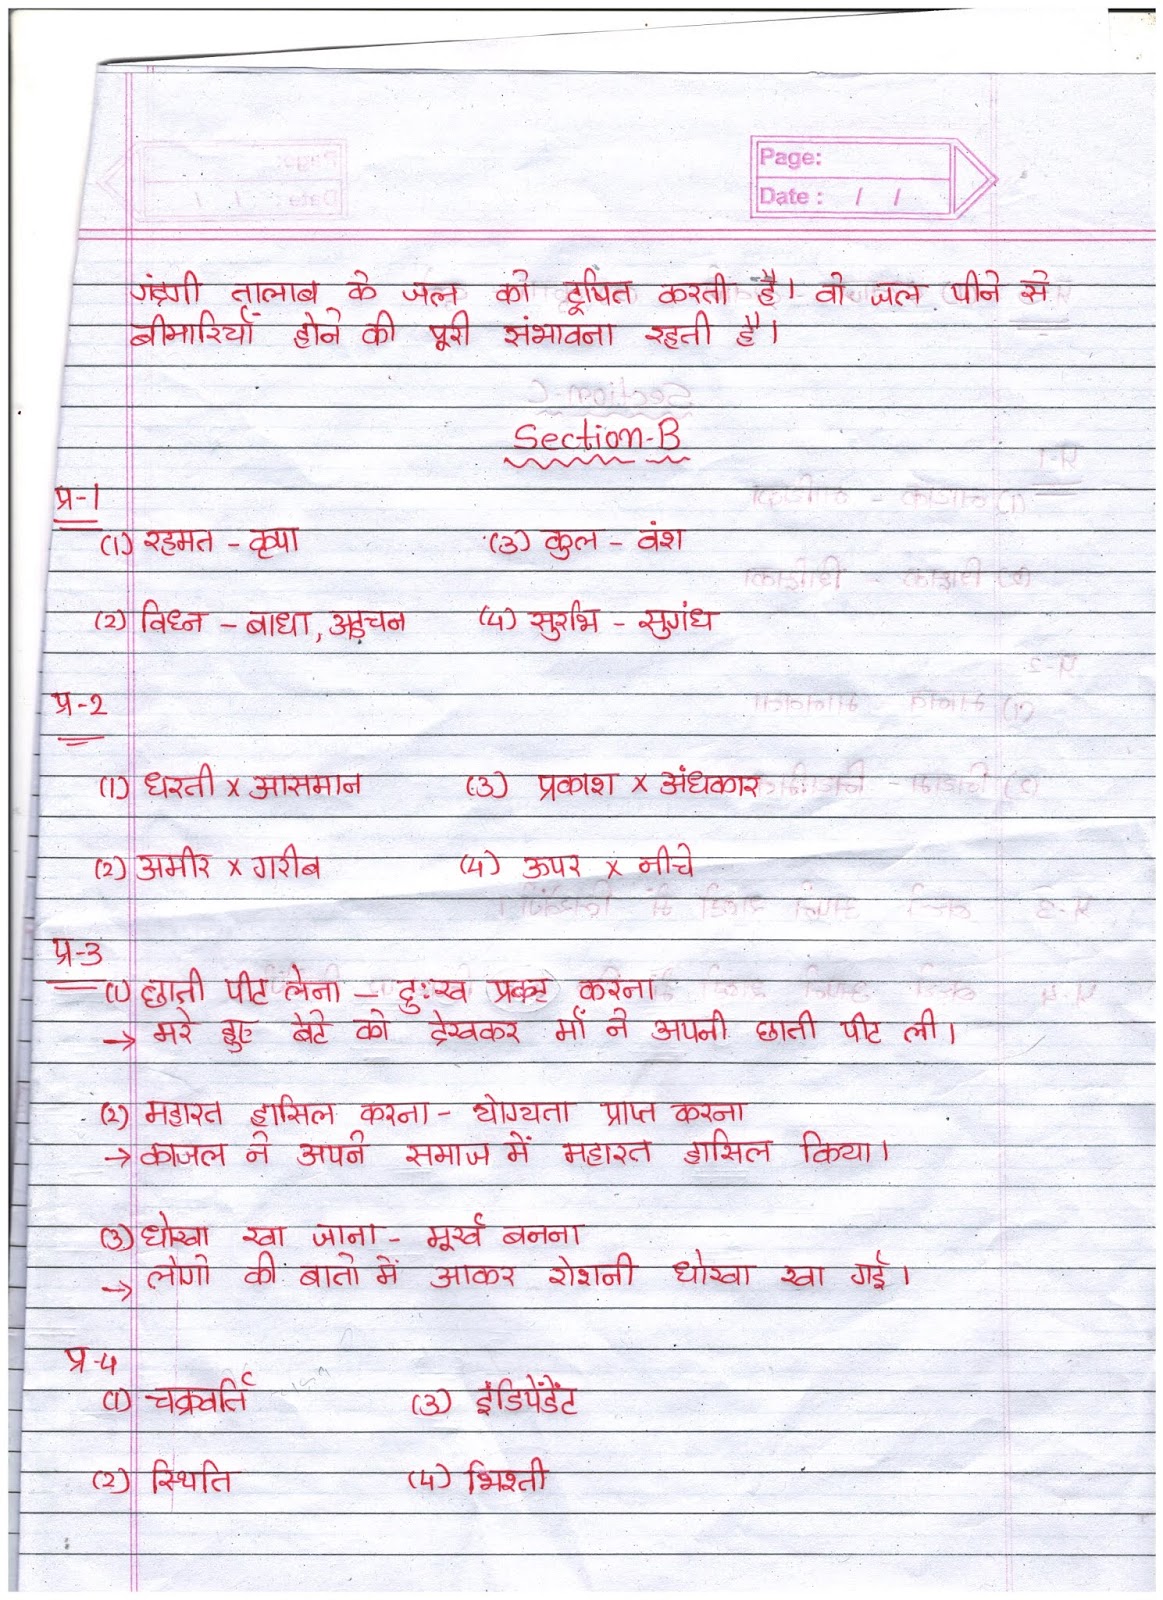 8th class essay 1 hindi exam paper